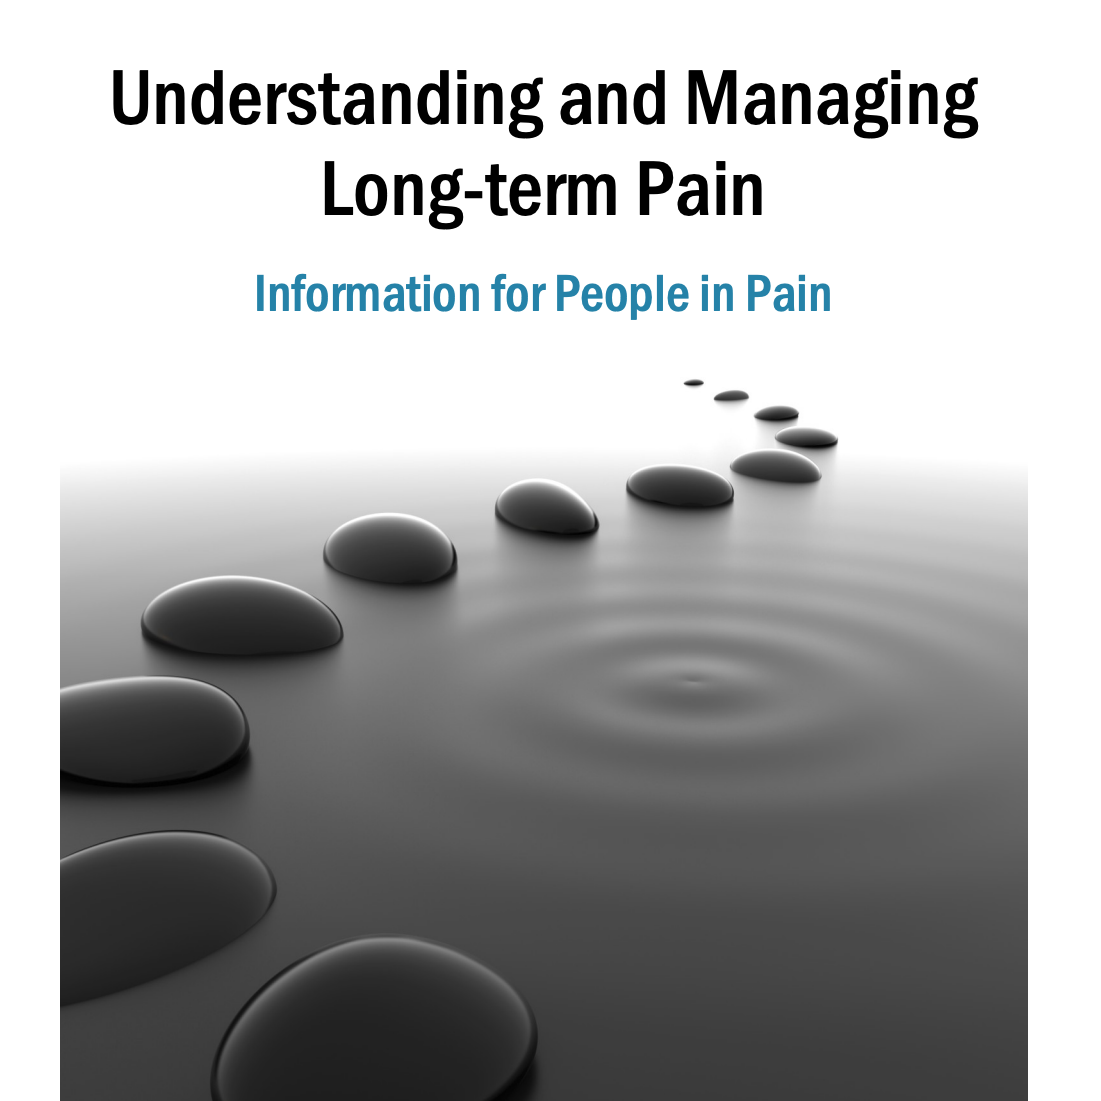 UNDERSTANDING & MANAGING LONG-TERM PAIN